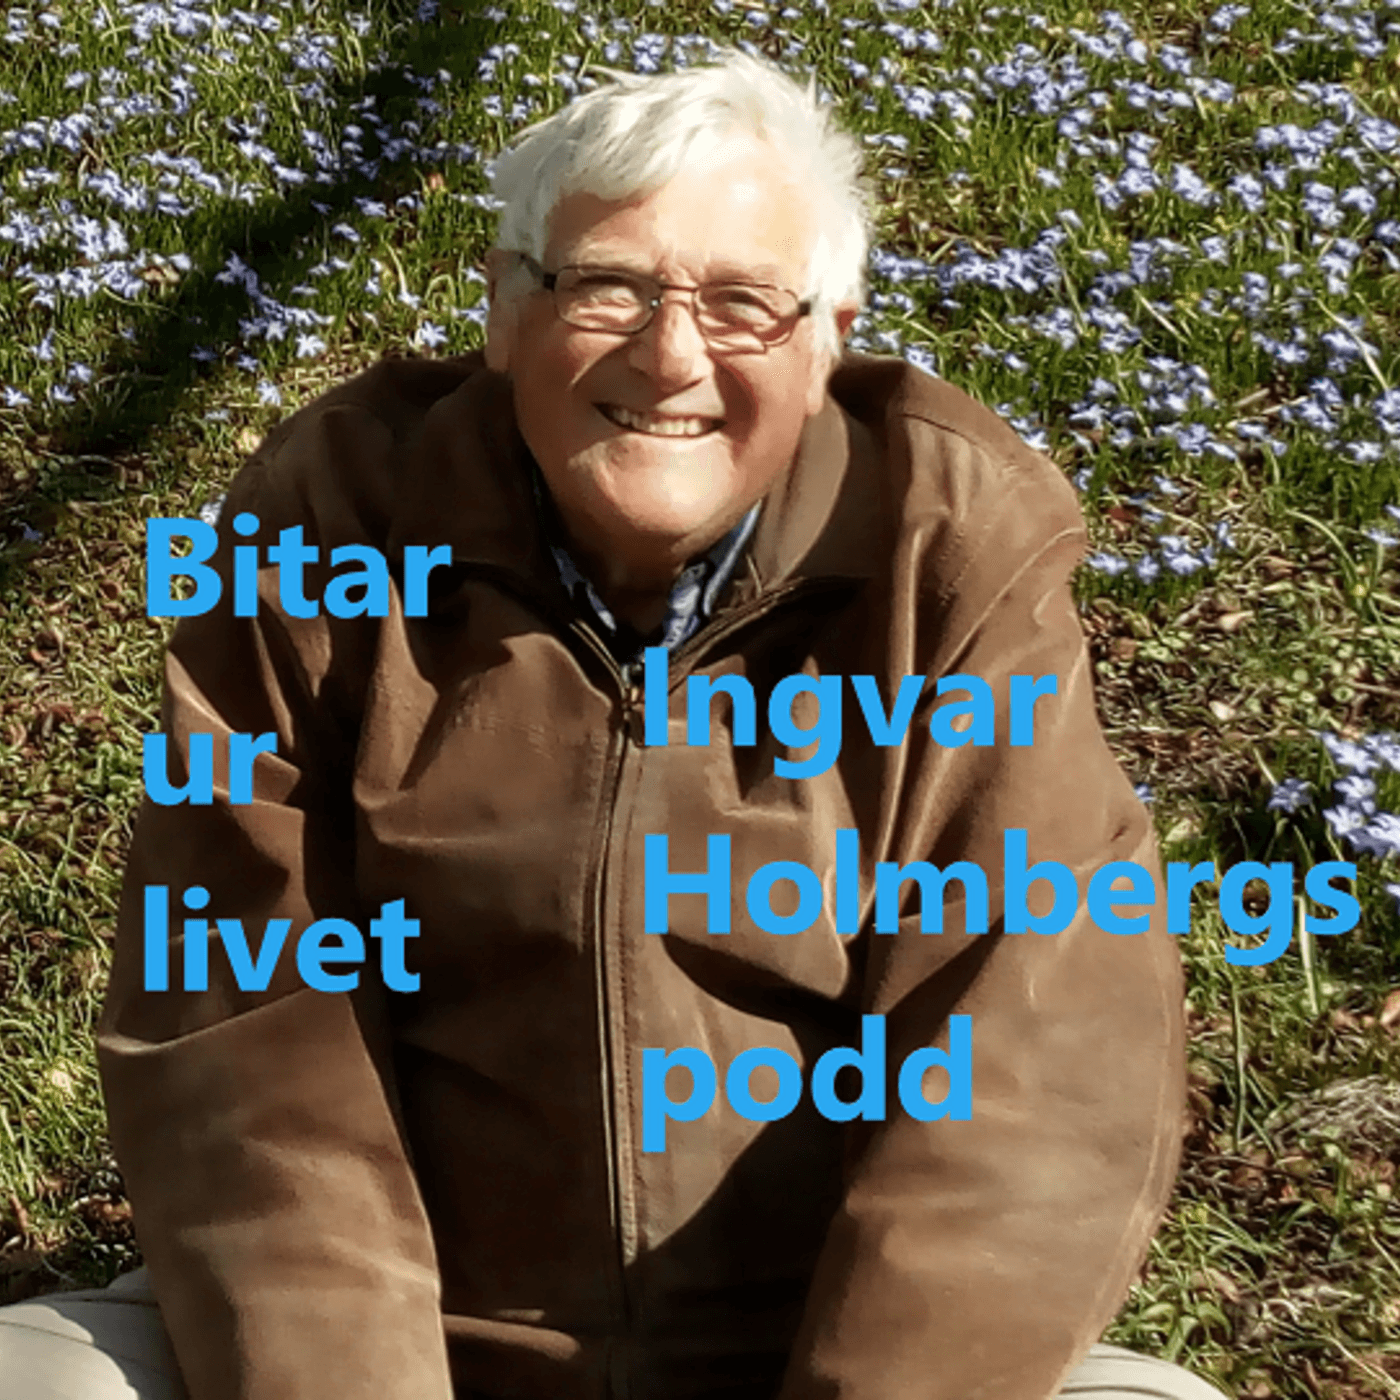 "Bitar ur livet" - Ingvar Holmbergs podd